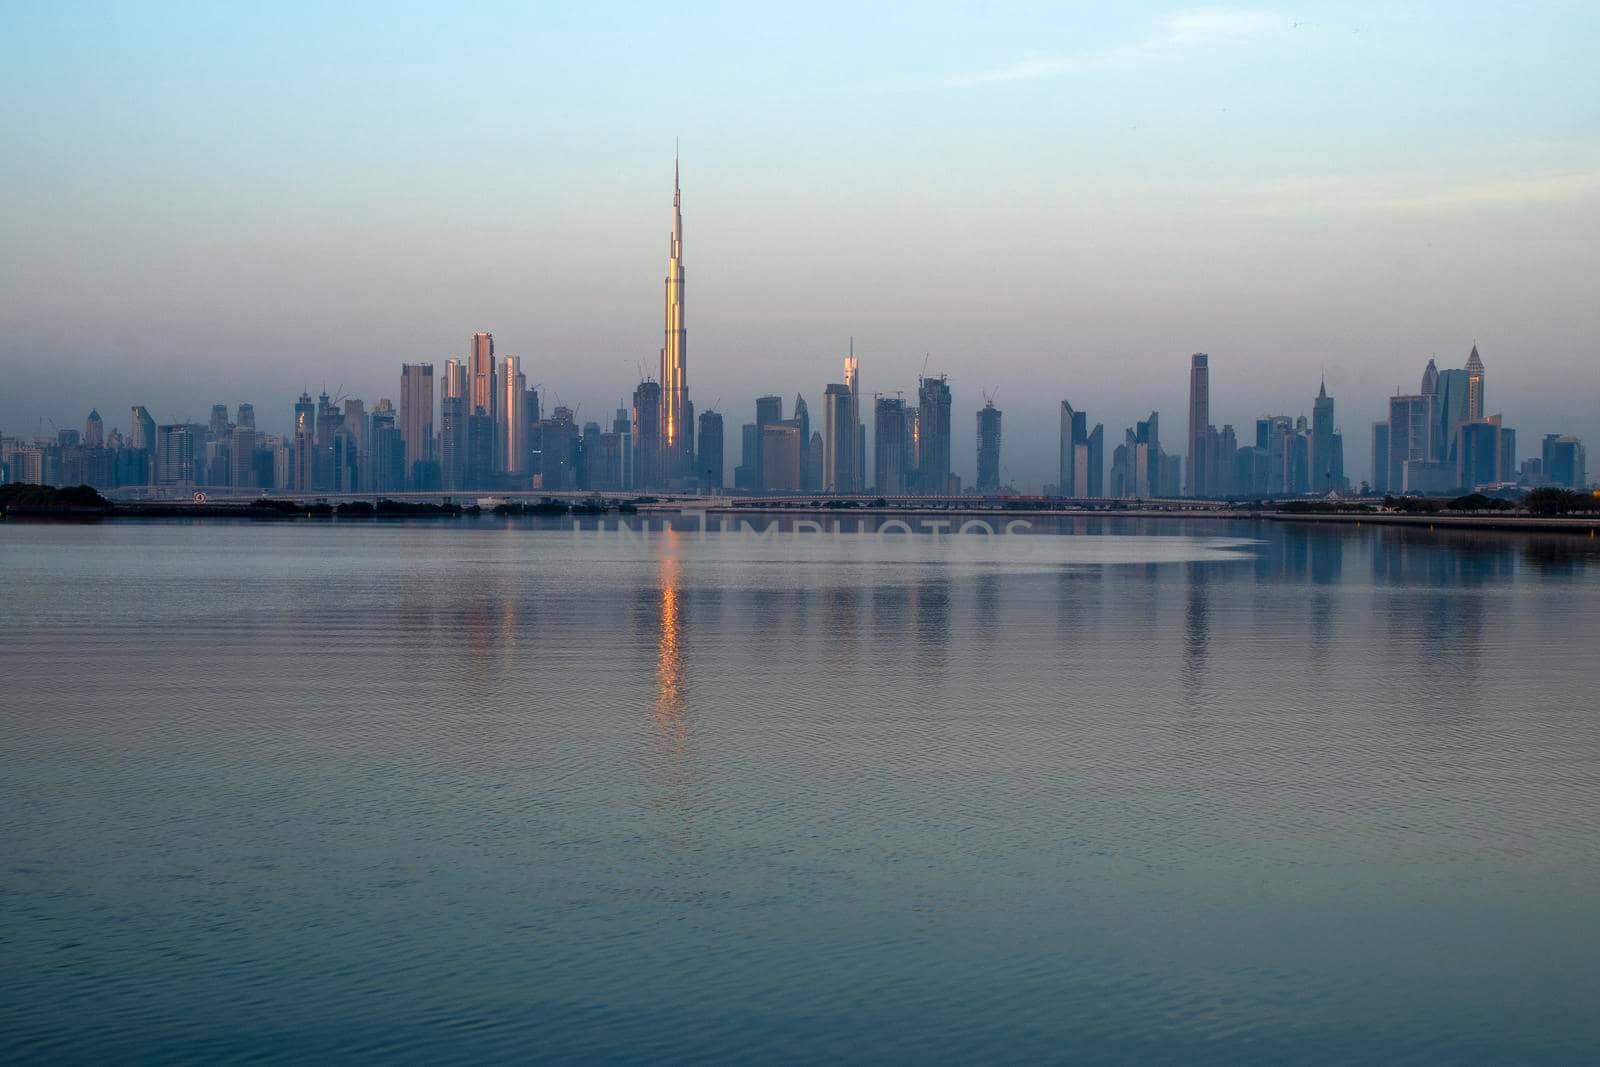 Dubai, UAE - 01.29.2021 Sunrise over Dubai city skyline.